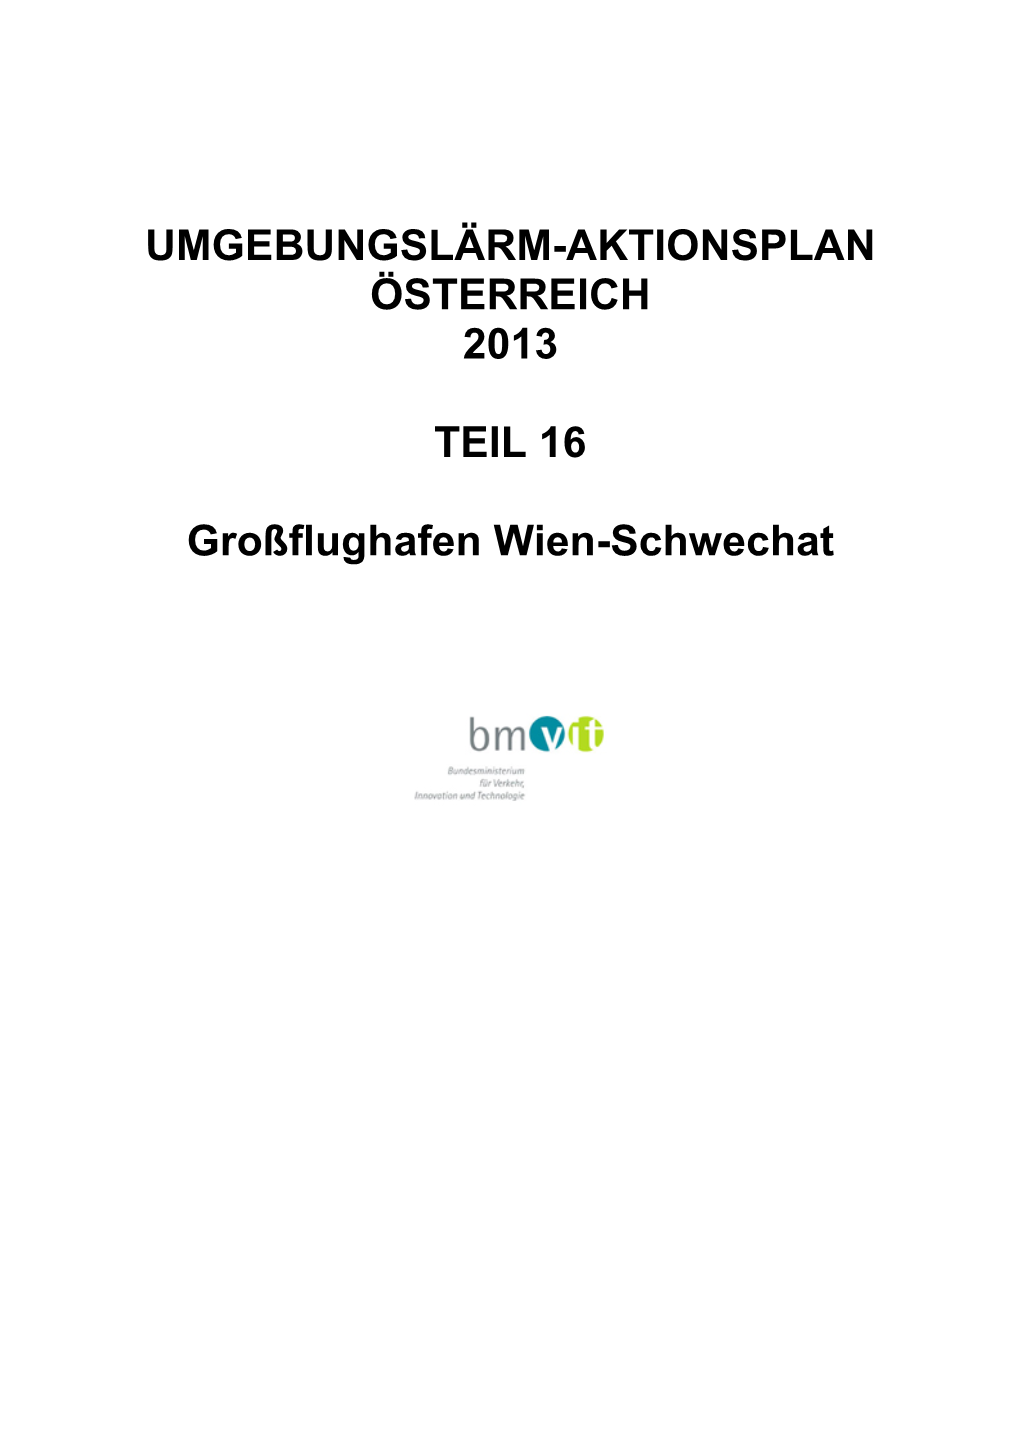 Umgebungslärm-Aktionsplan Österreich 2013 Teil 16